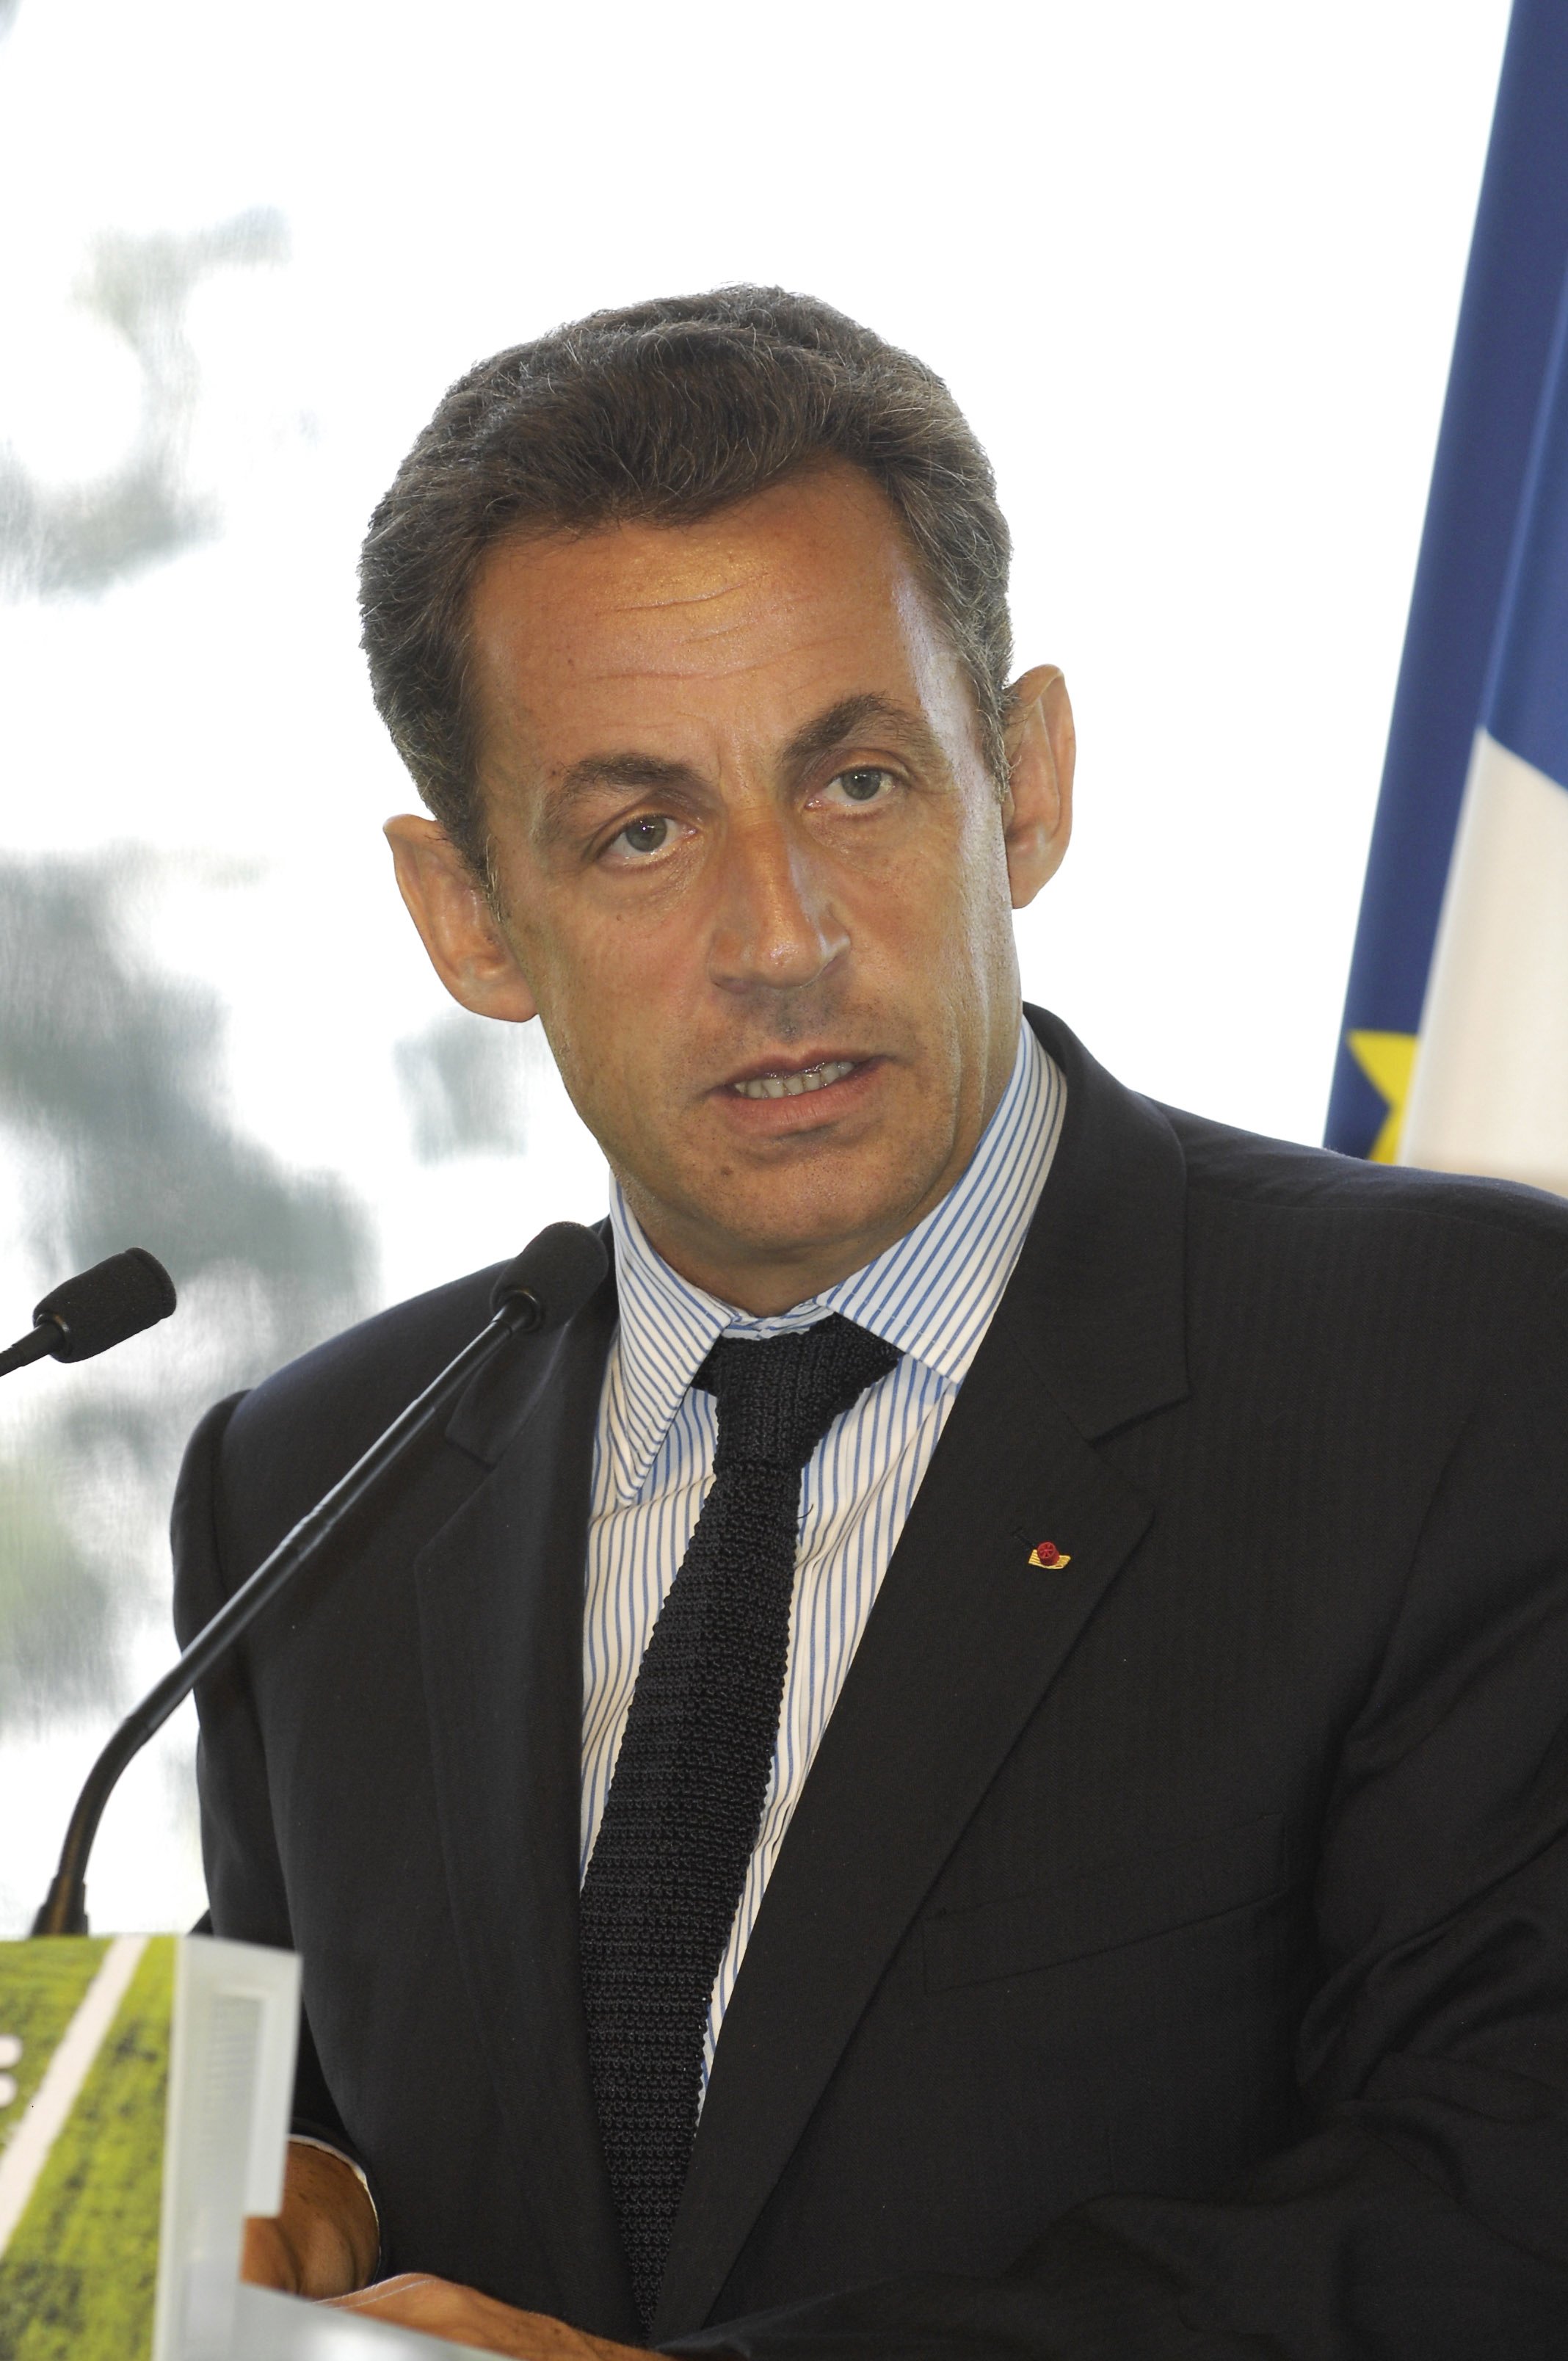 Nicolas_Sarkozy.jpg